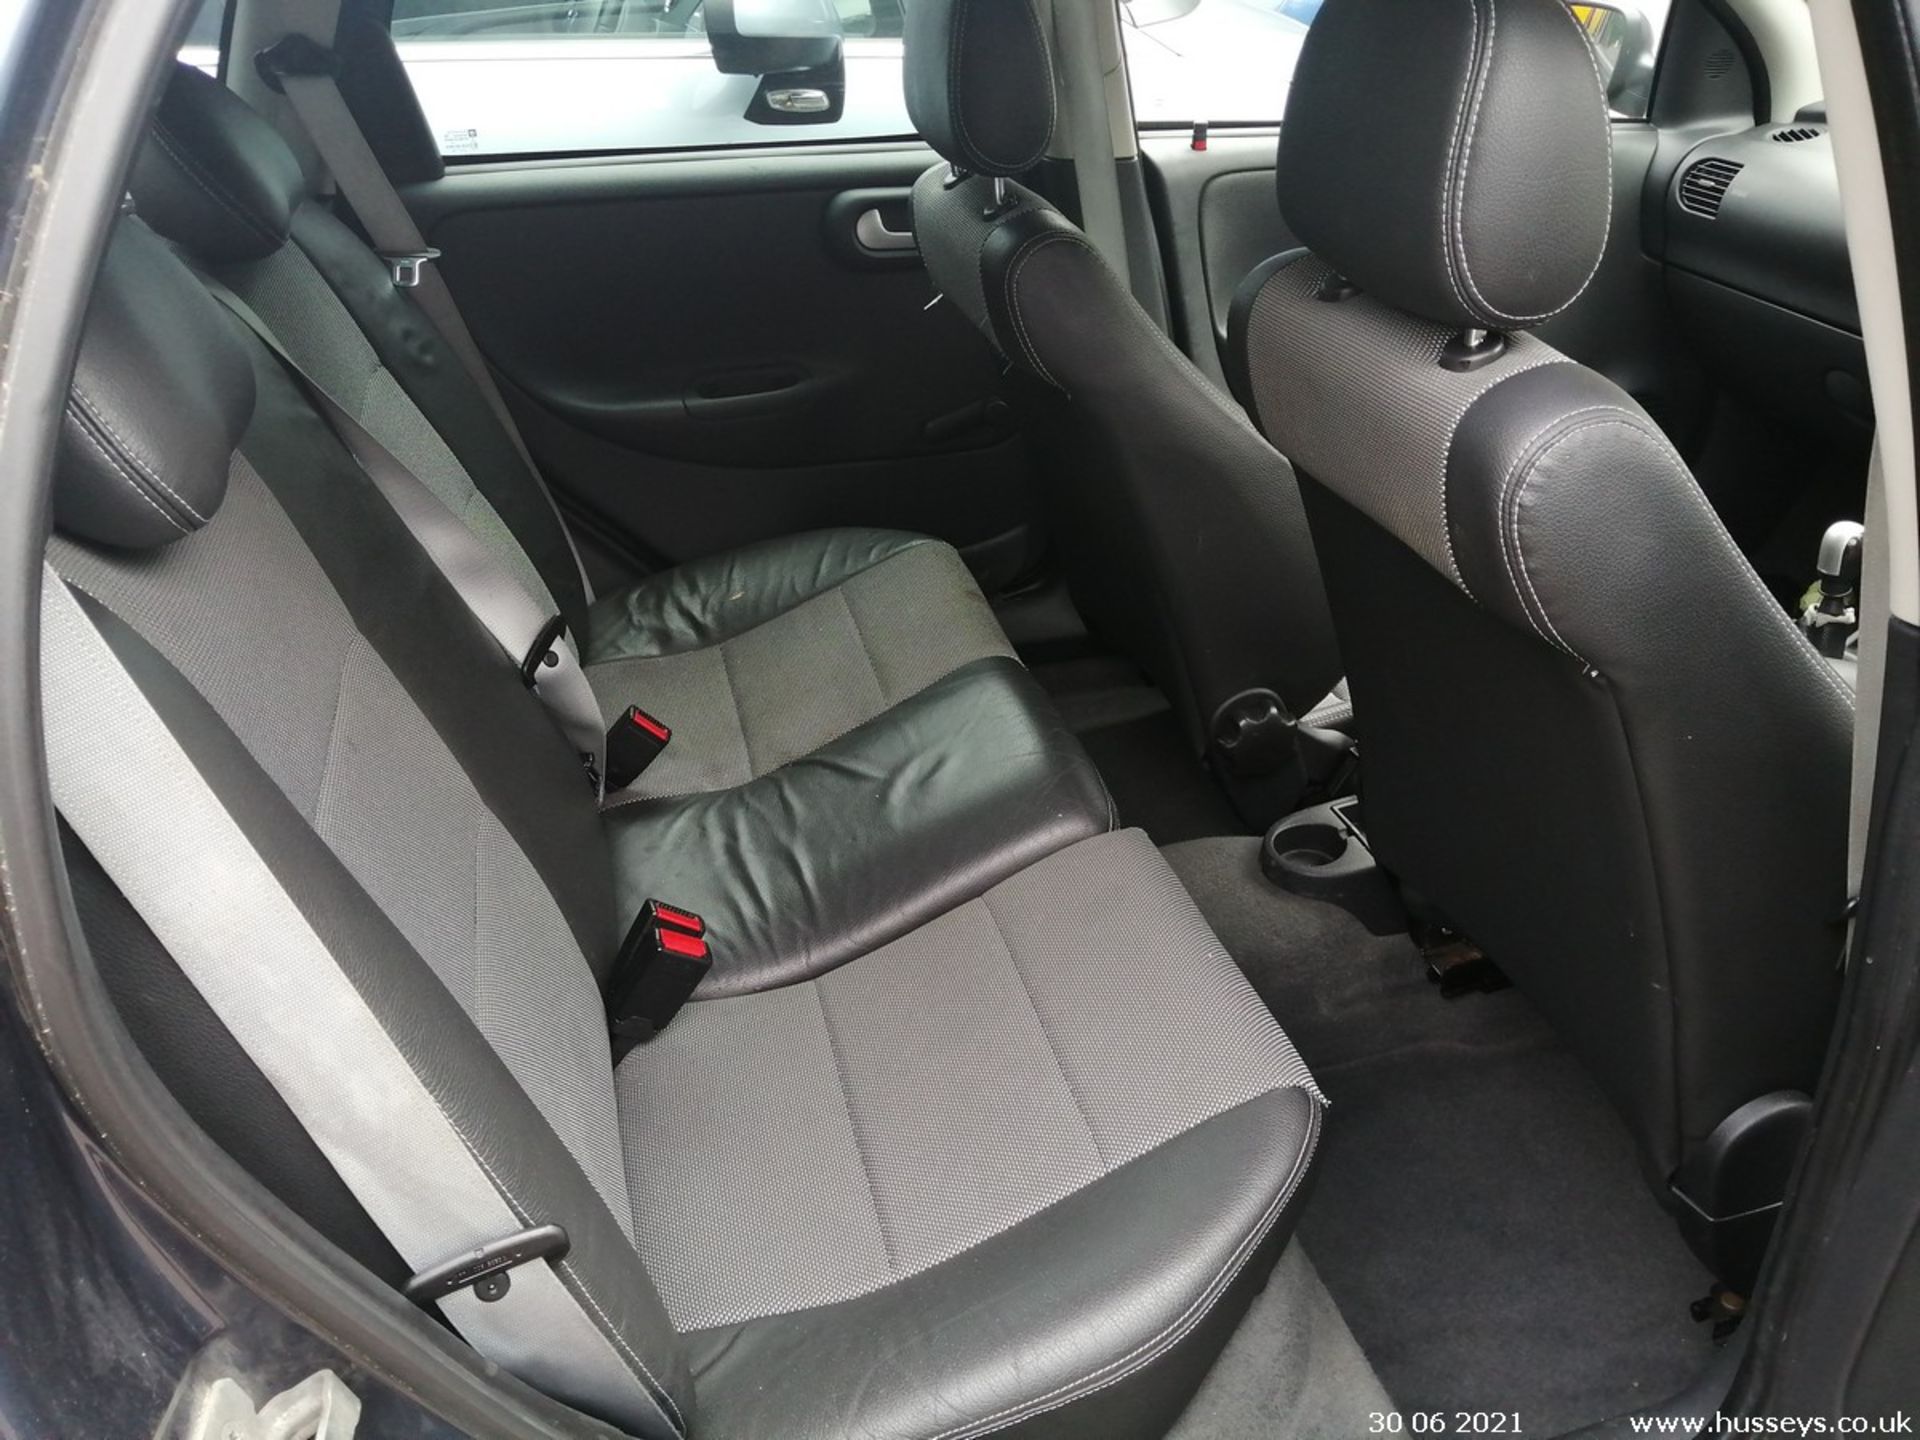 06/06 VAUXHALL CORSA SXI+ CDTI - 1248cc 5dr Hatchback (Blue, 45k) - Image 12 of 12